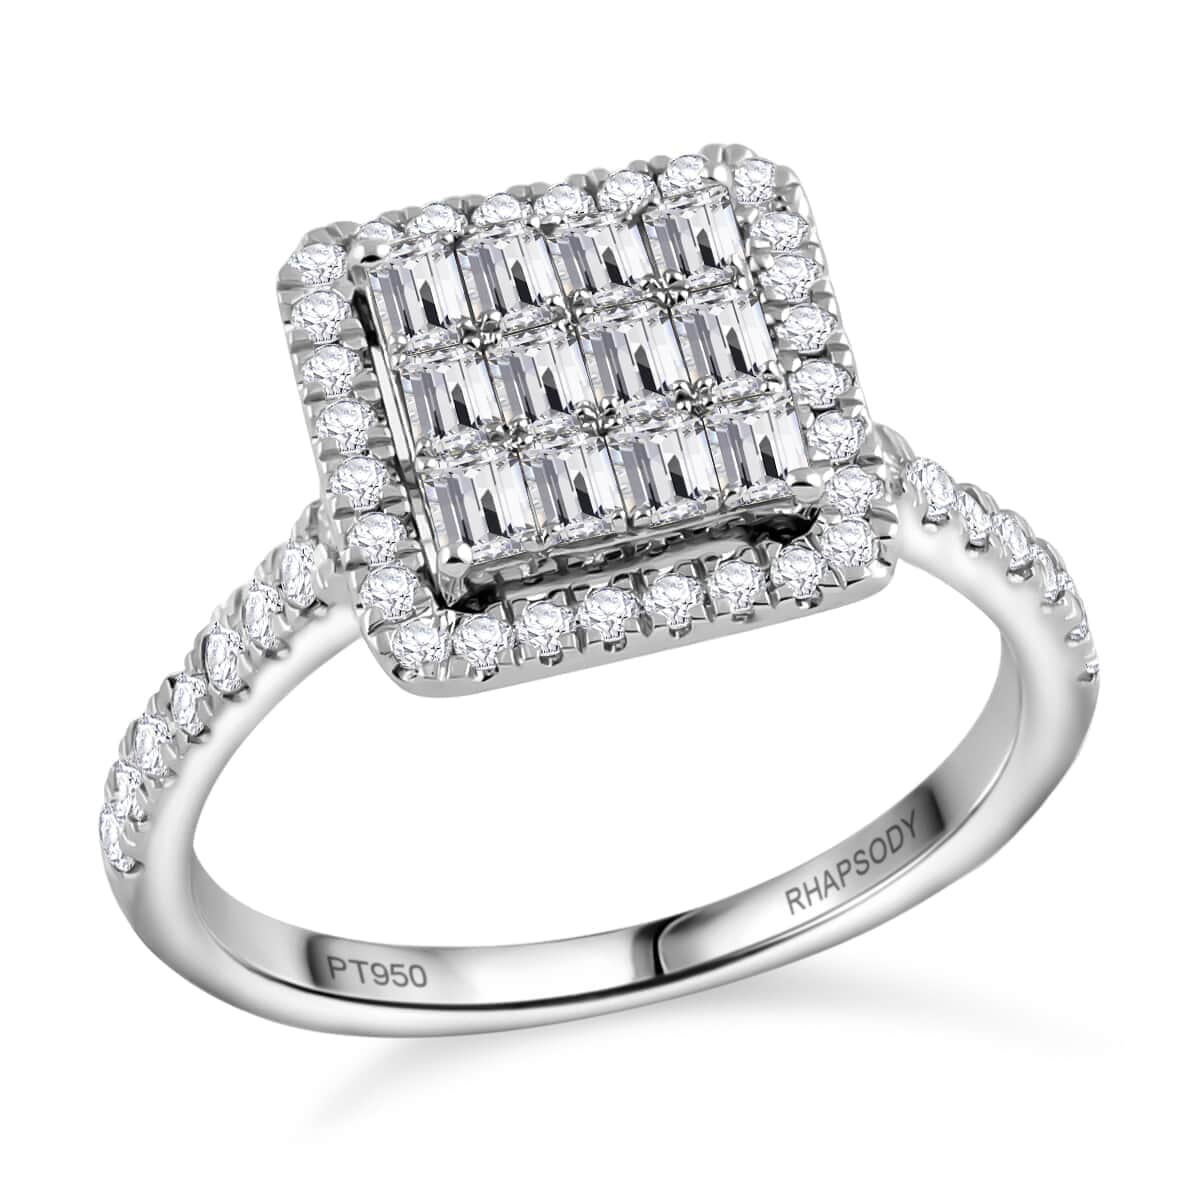 RHAPSODY 950 Platinum Diamond (G-H, VS) Ring (Size 5.0) (4.95 g) 1.00 ctw image number 0